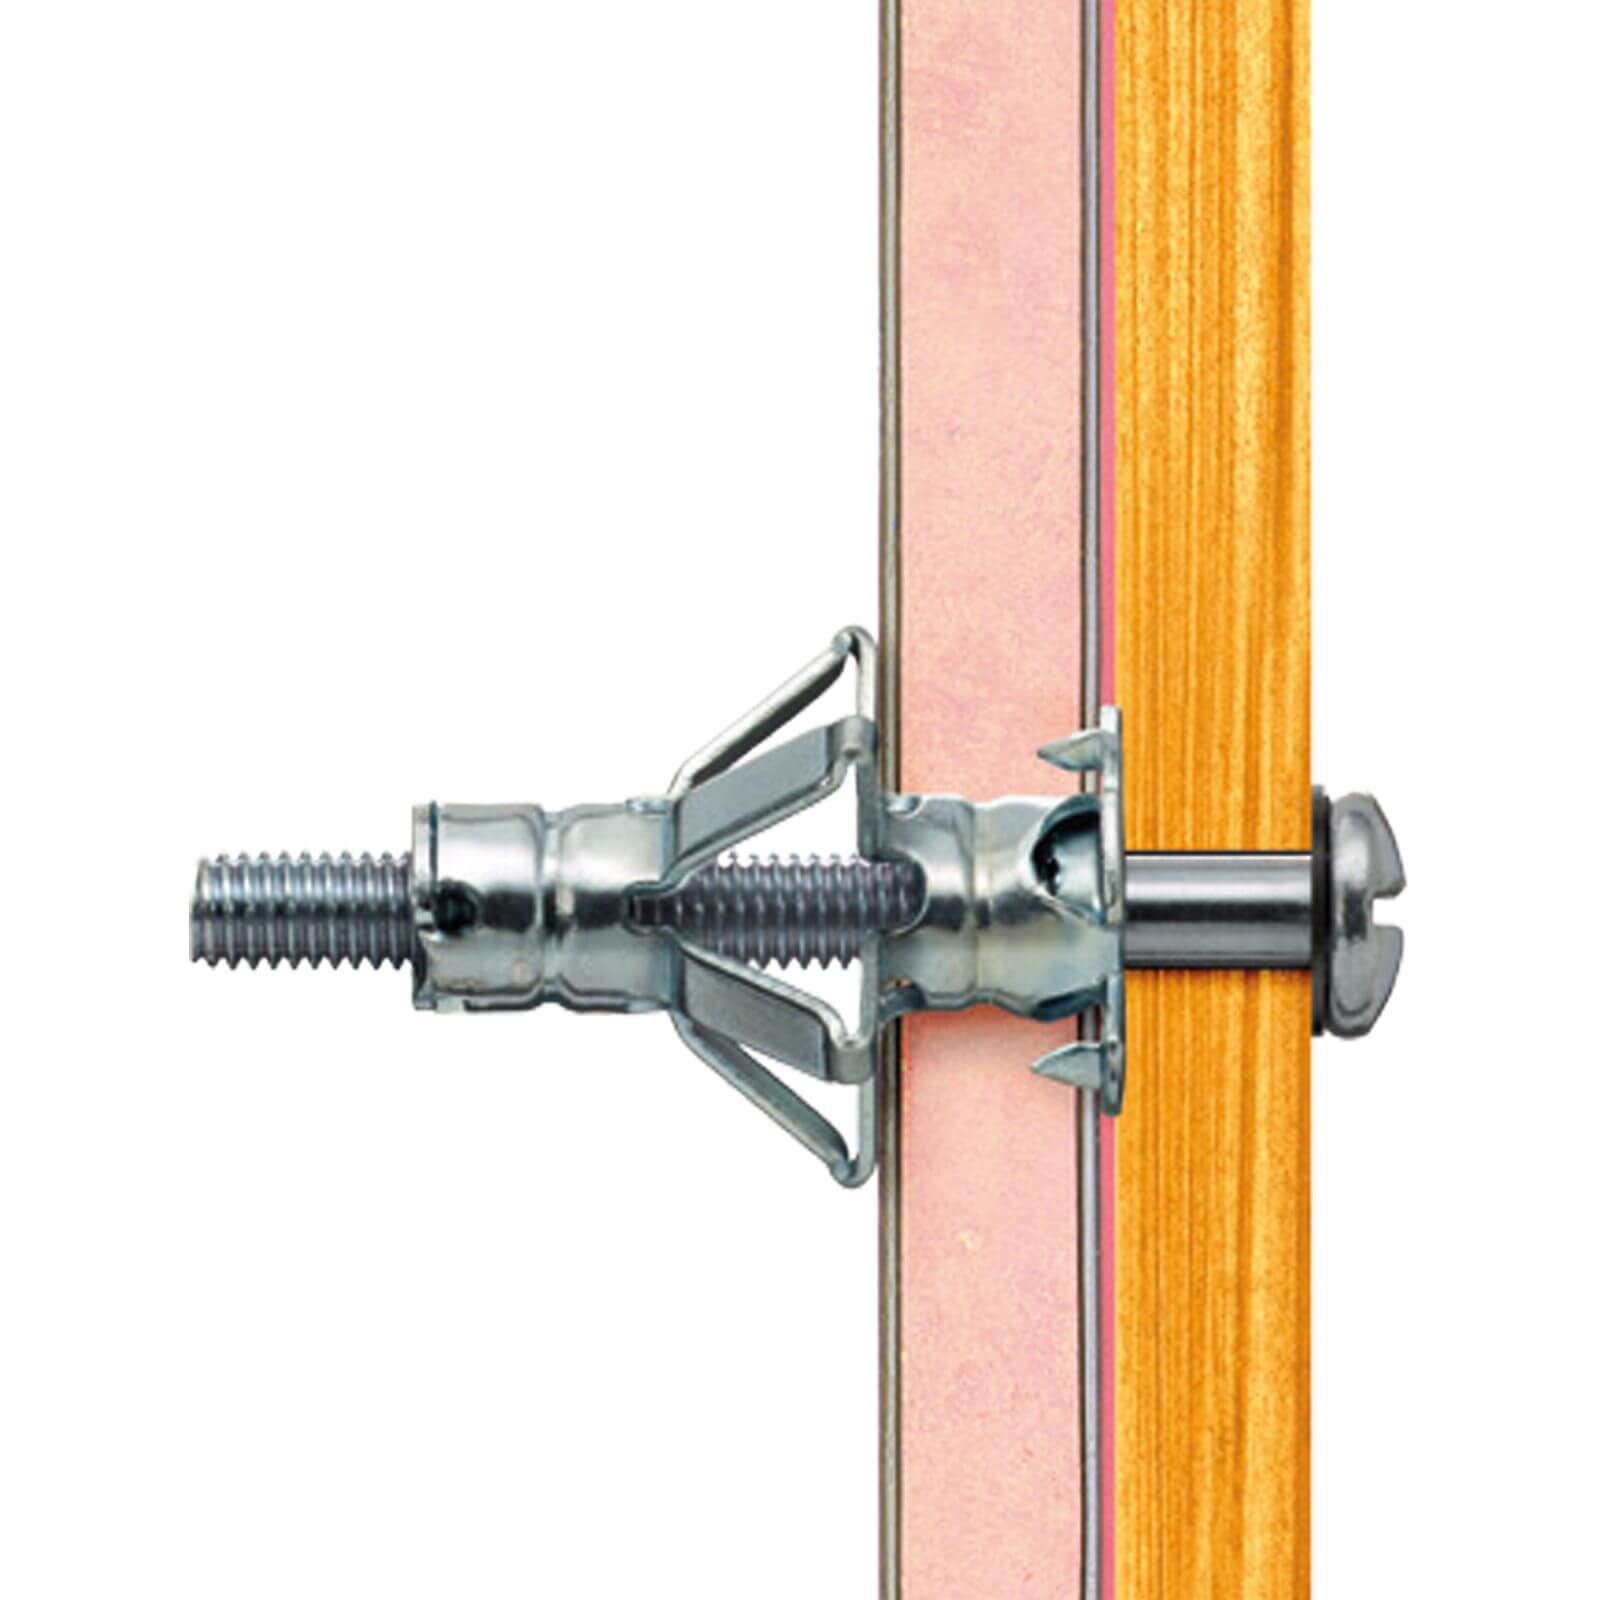 Plasplugs Cavity Anchor M4 x 40 x 5